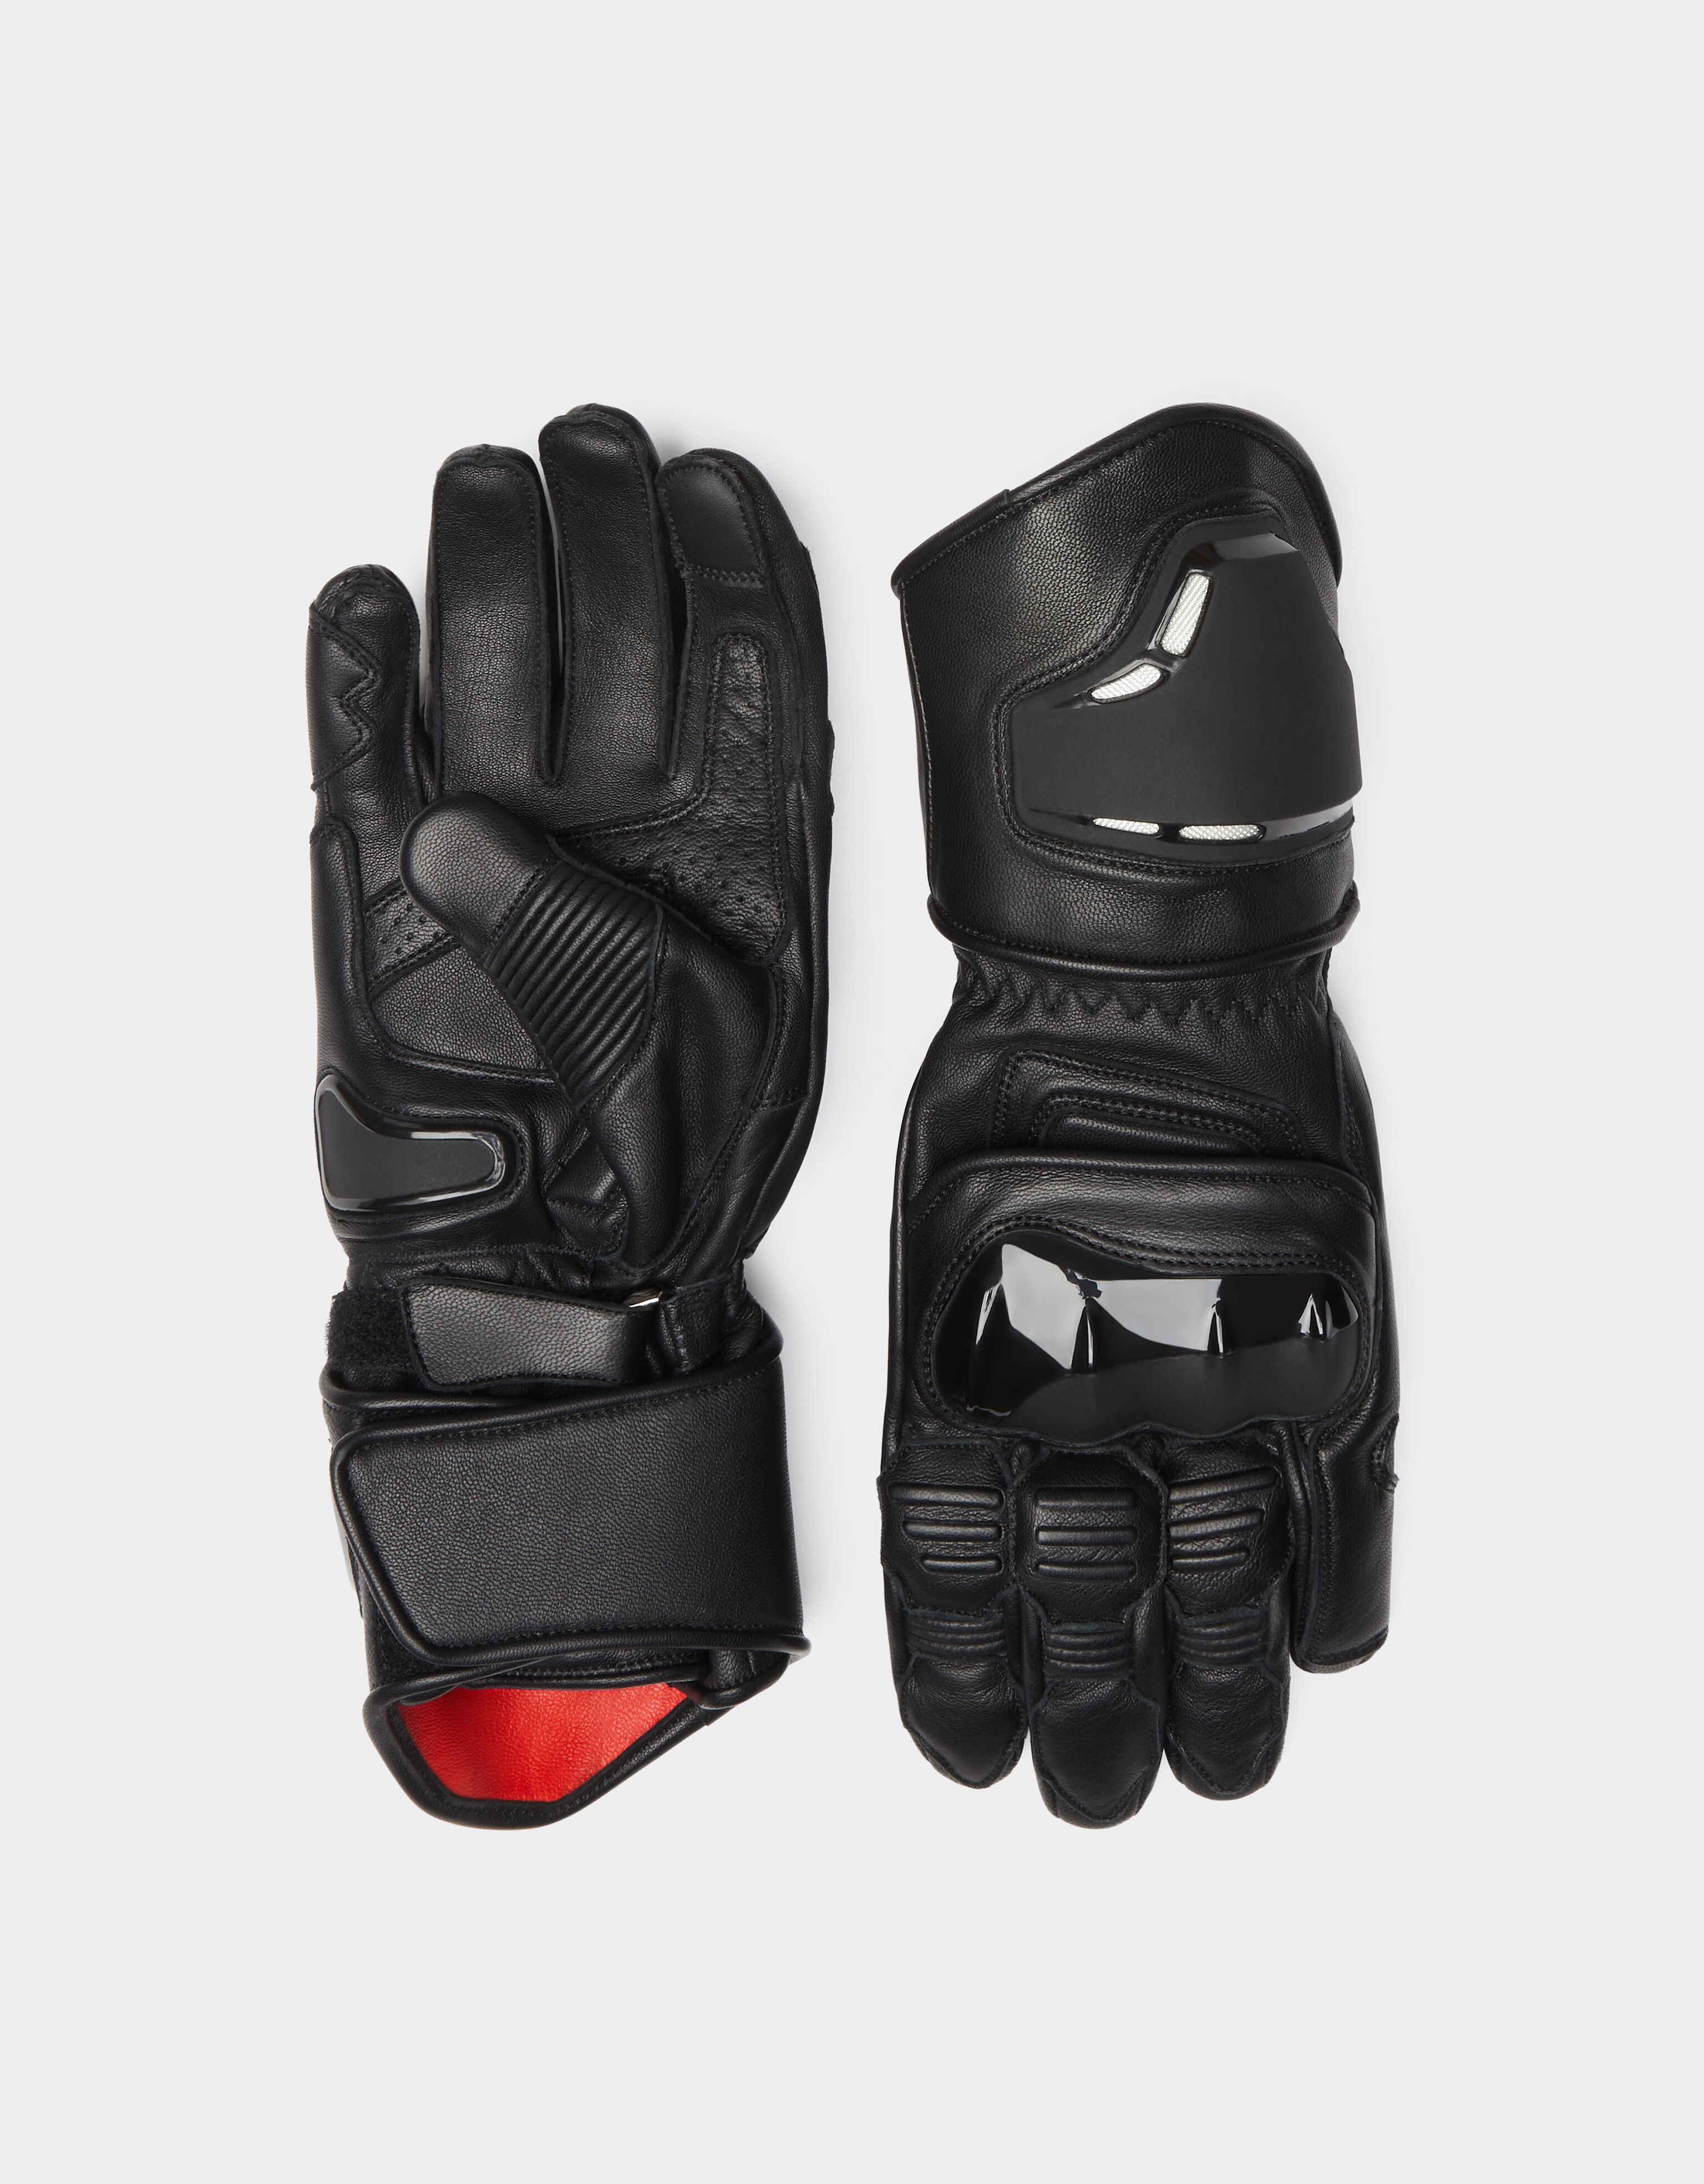 Ferrari Racing gloves in leather Black 47431f